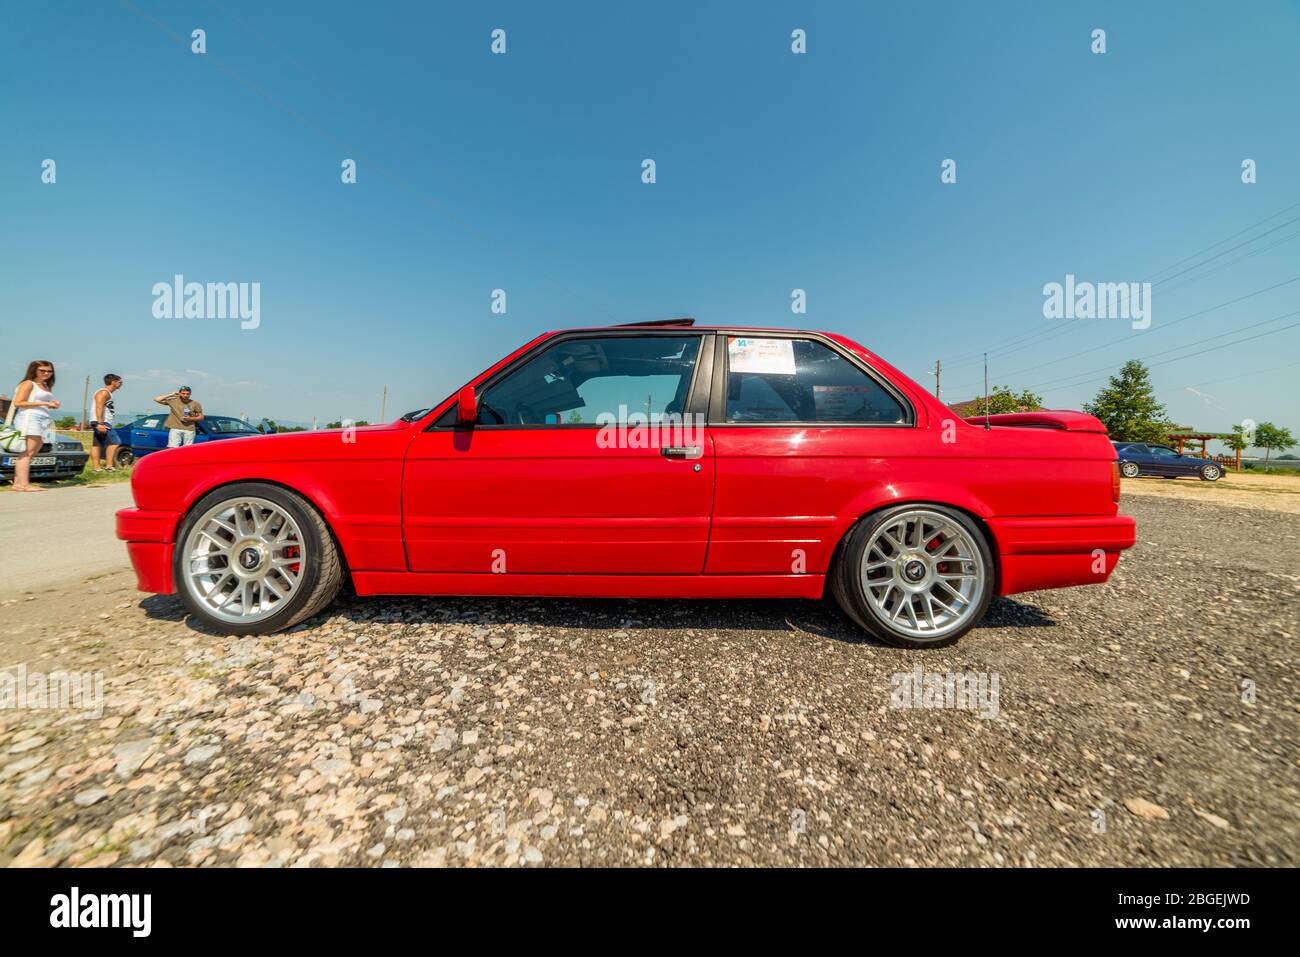 Red Bmw 0 Car Immagini E Fotos Stock Alamy